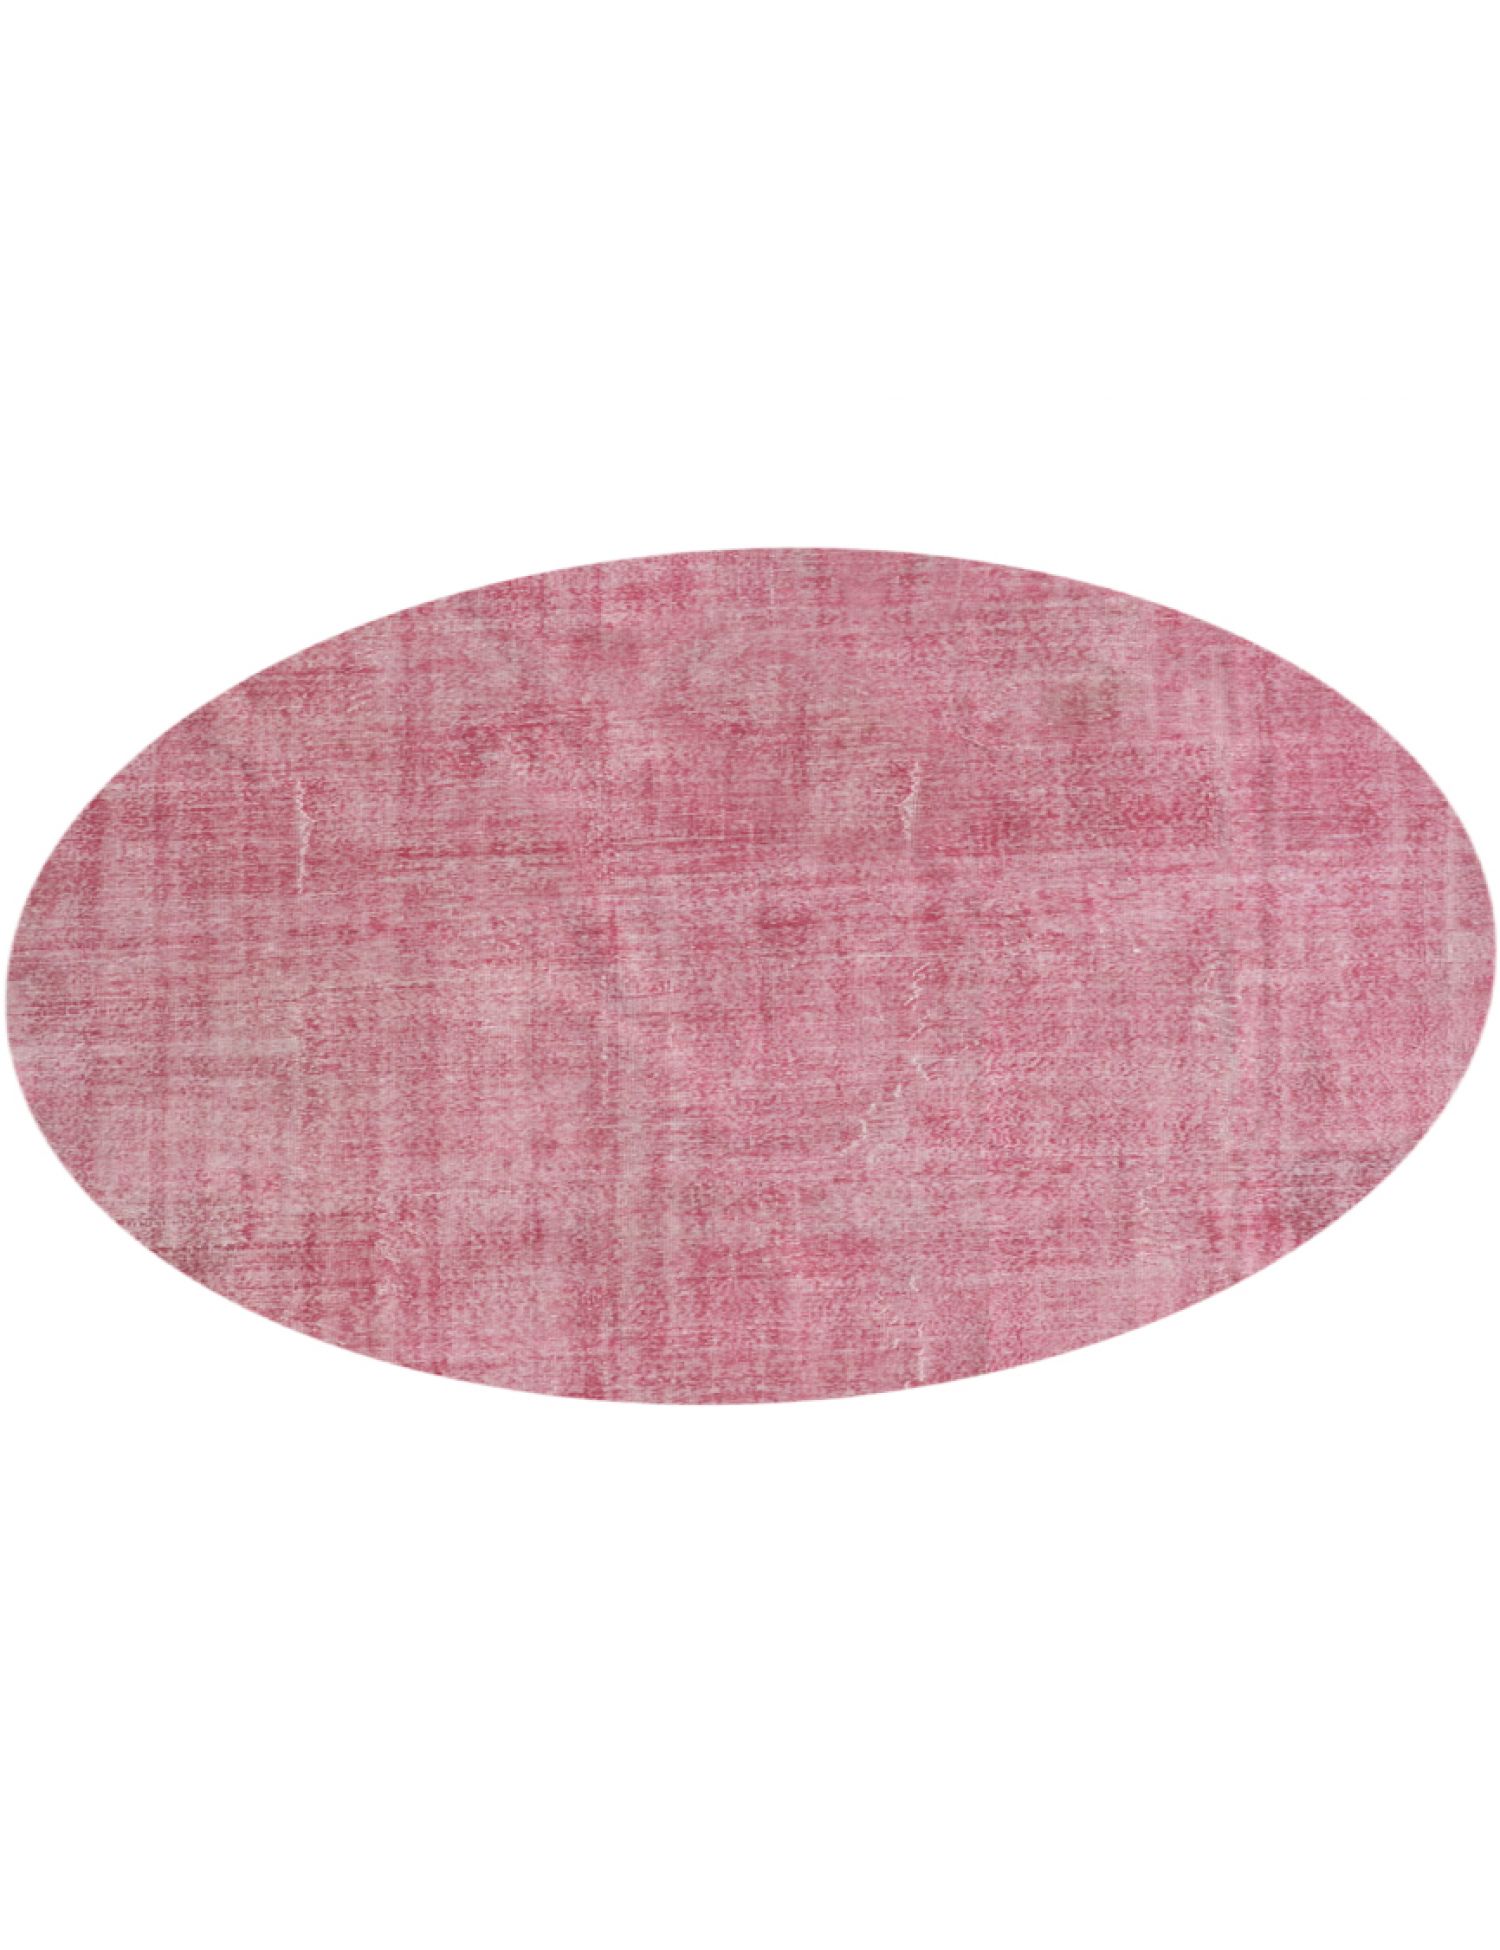 Tappeto Vintage  rosa <br/>251 x 251 cm